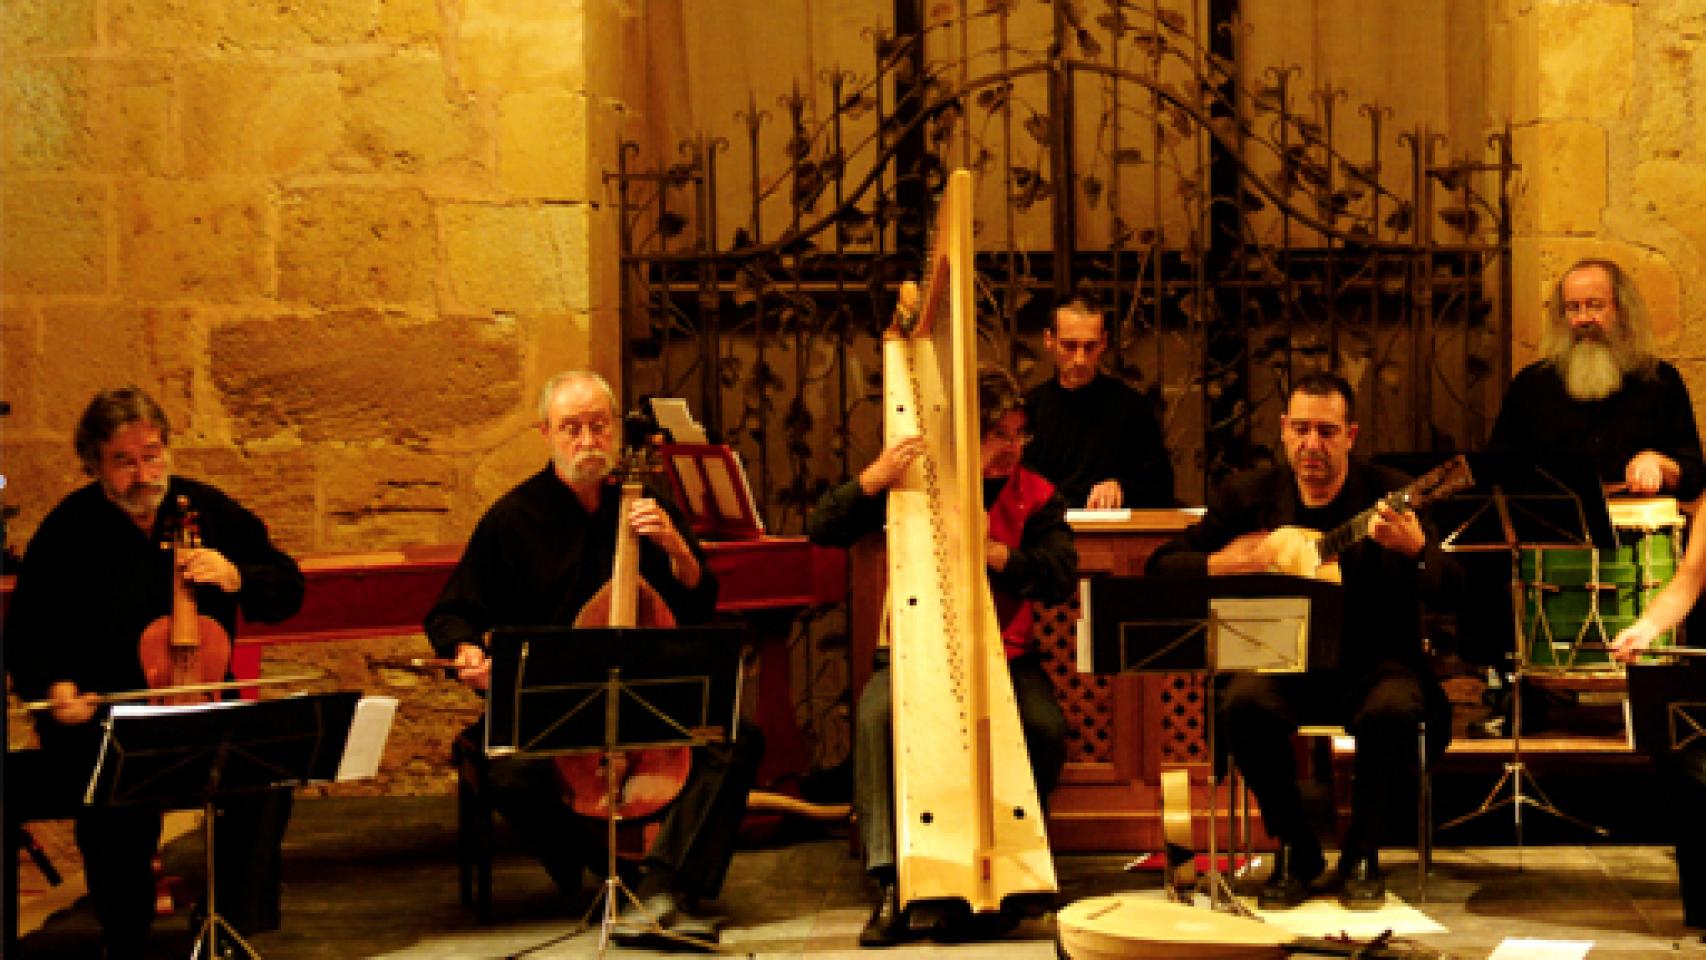 Image: Savall viaja a la música del Imperio Otomano